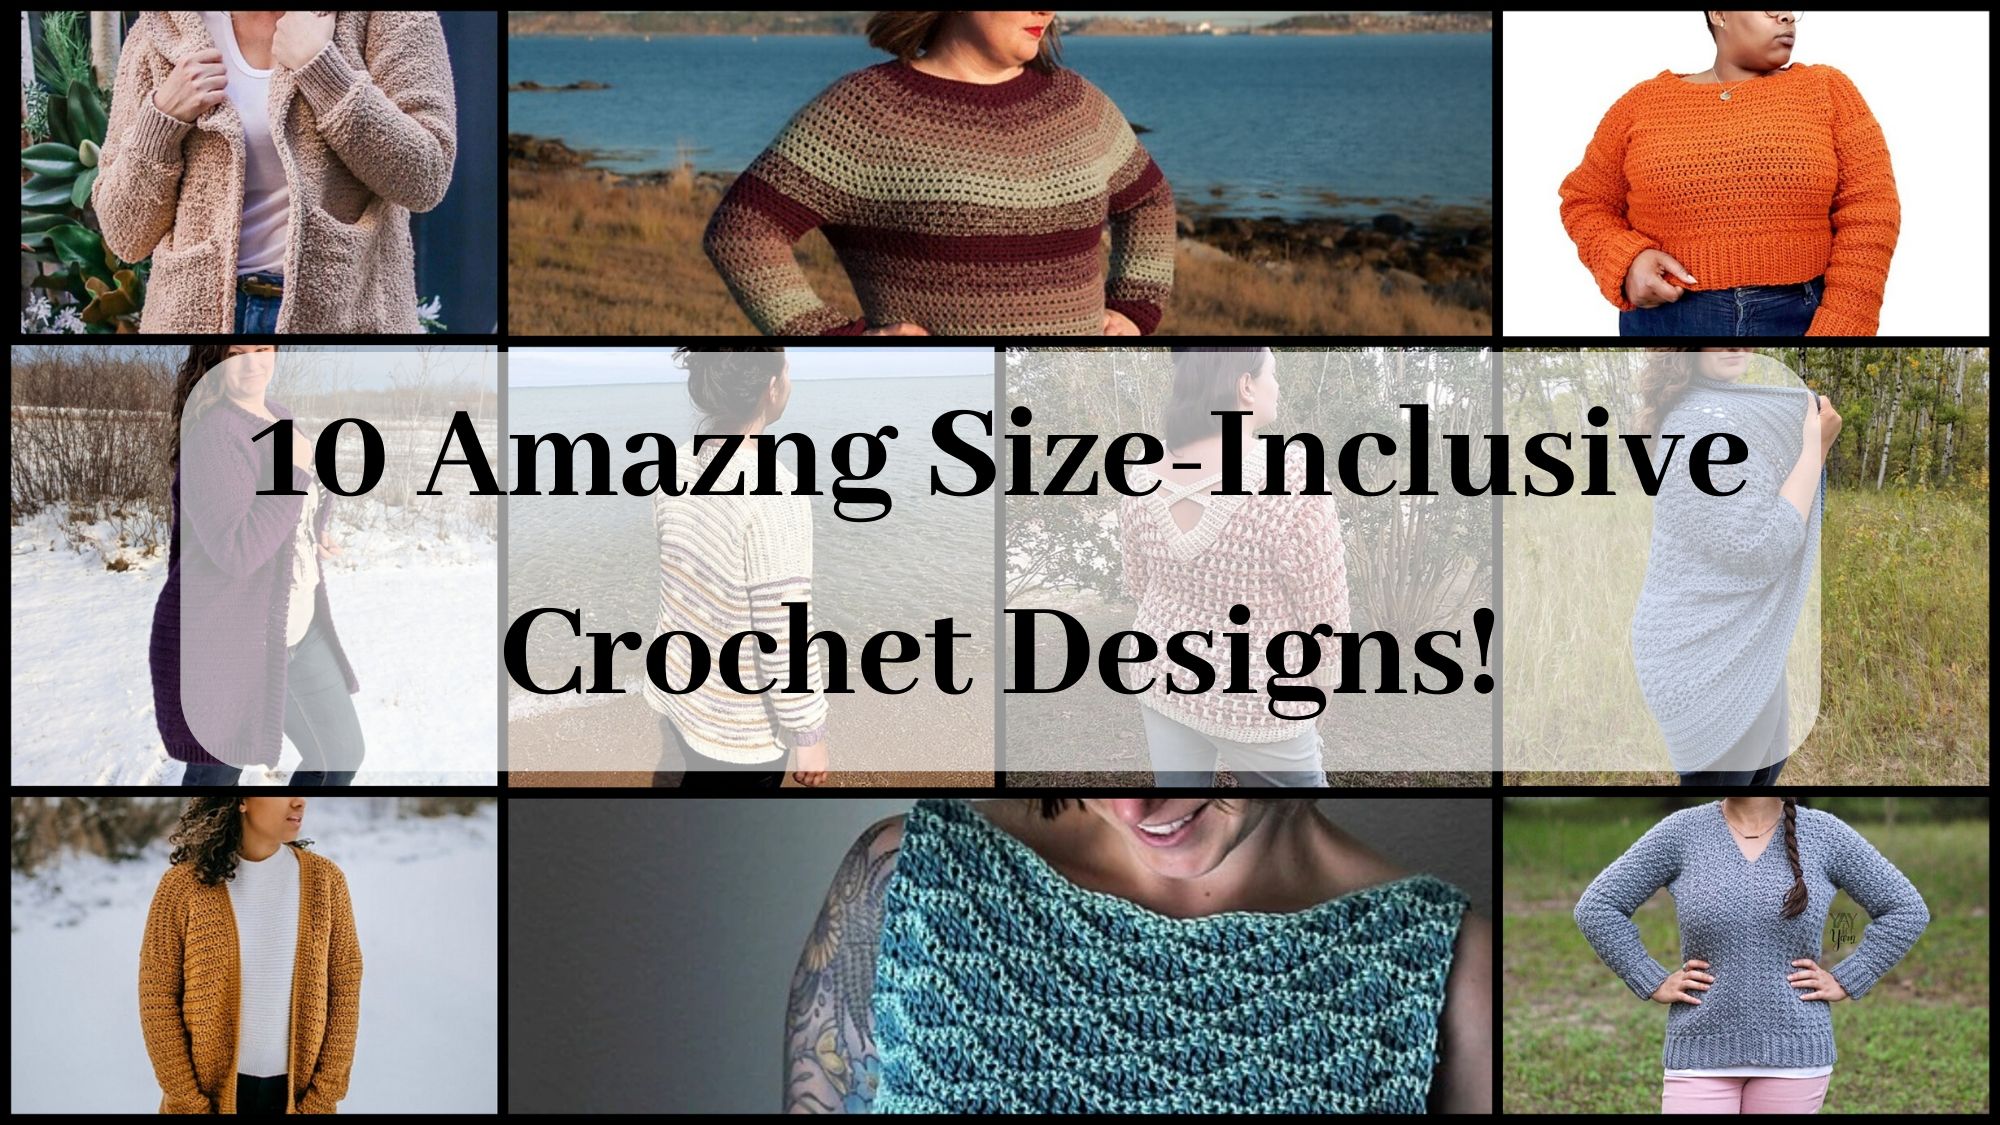 10 Amazing Size-Inclusive Crochet Designs!